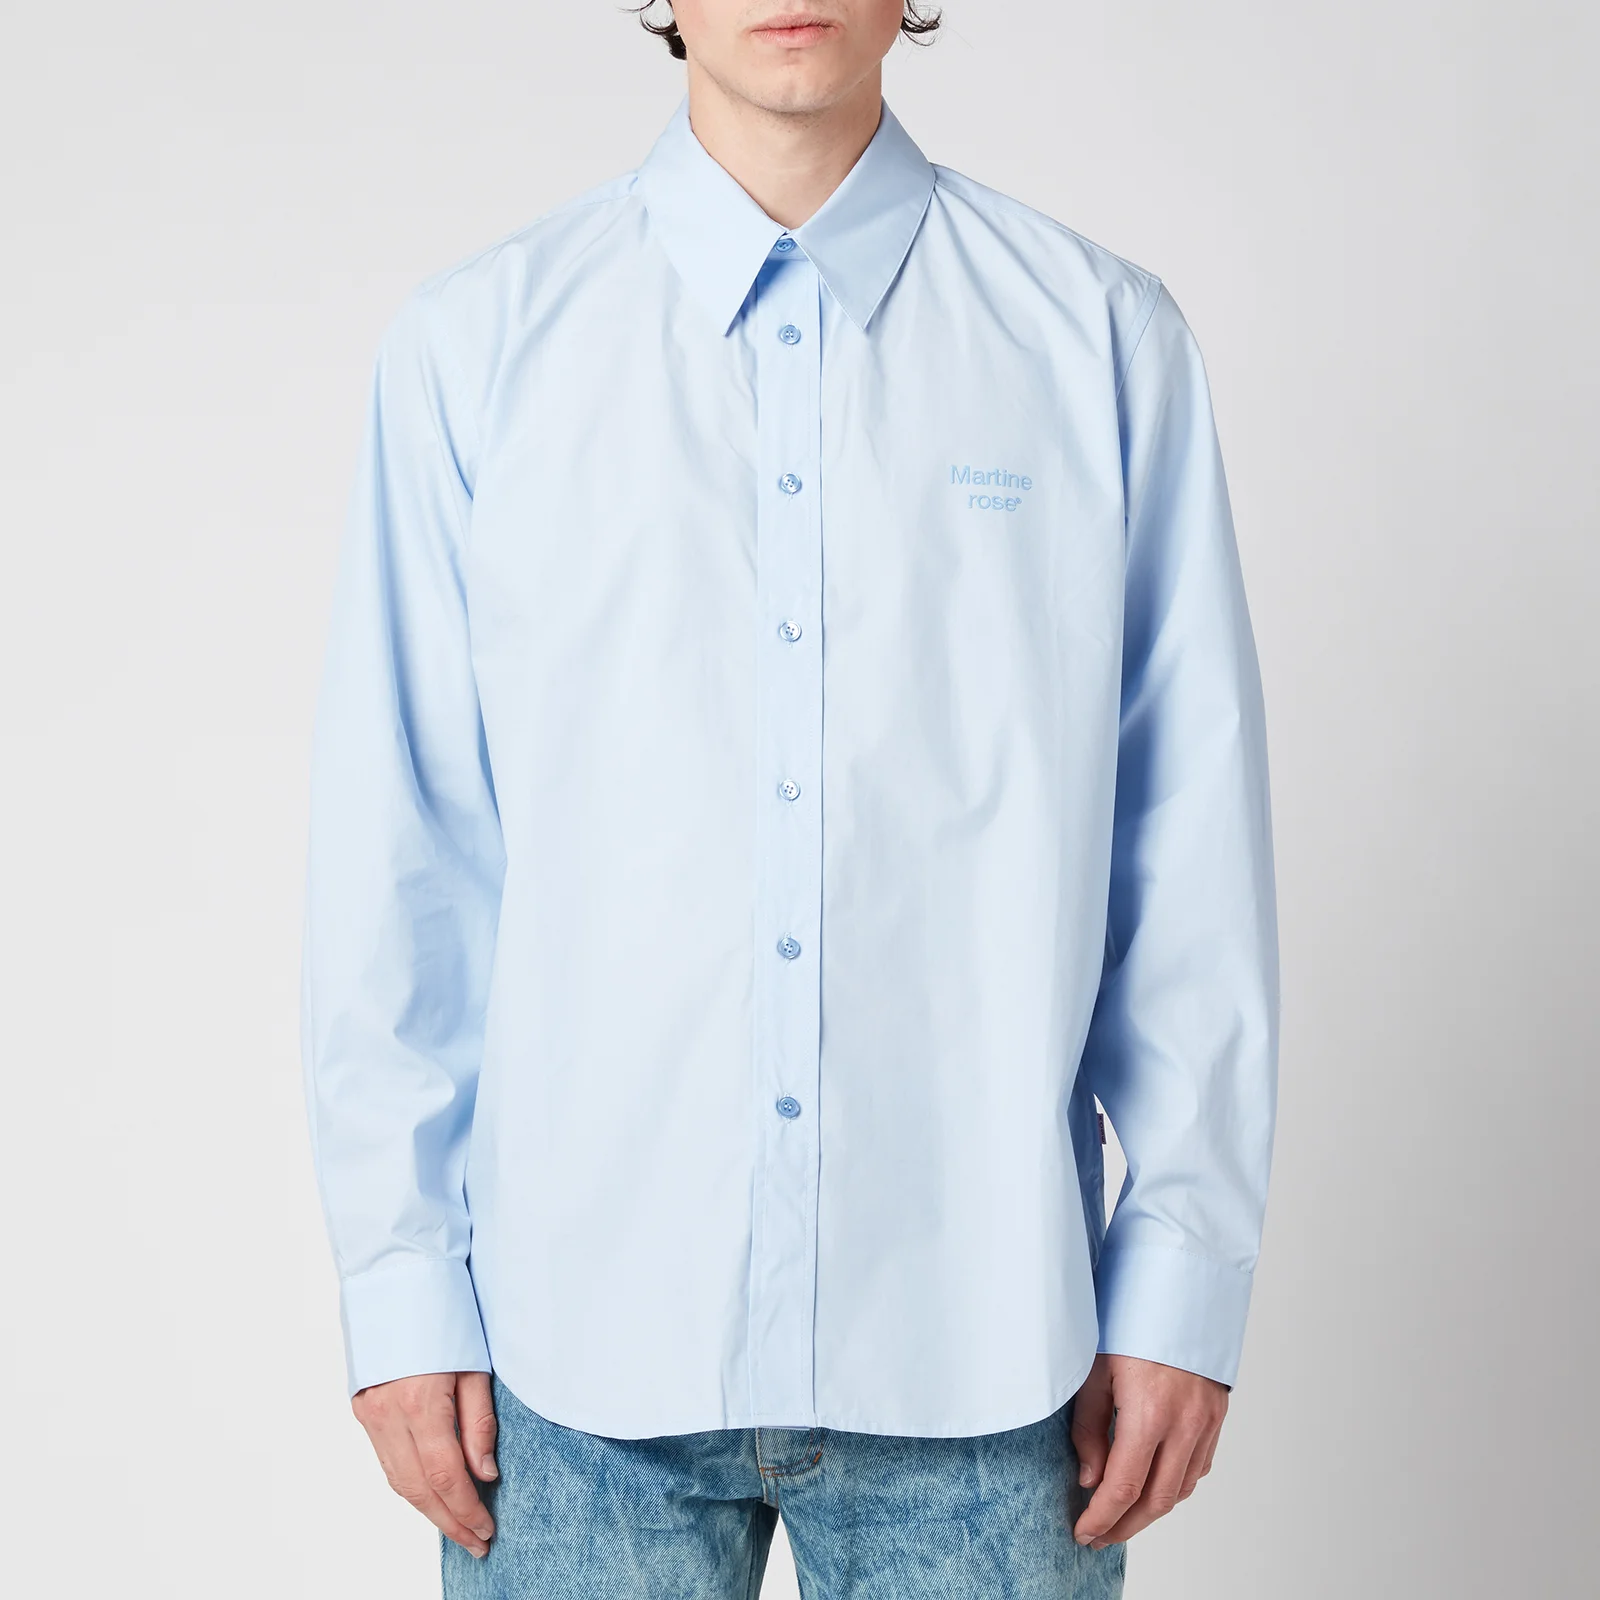 Martine Rose Men's Classic Long Sleeve Shirt - Light Blue Image 1